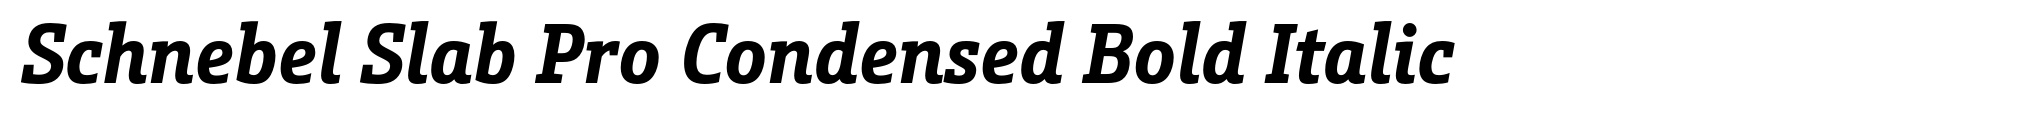 Schnebel Slab Pro Condensed Bold Italic image